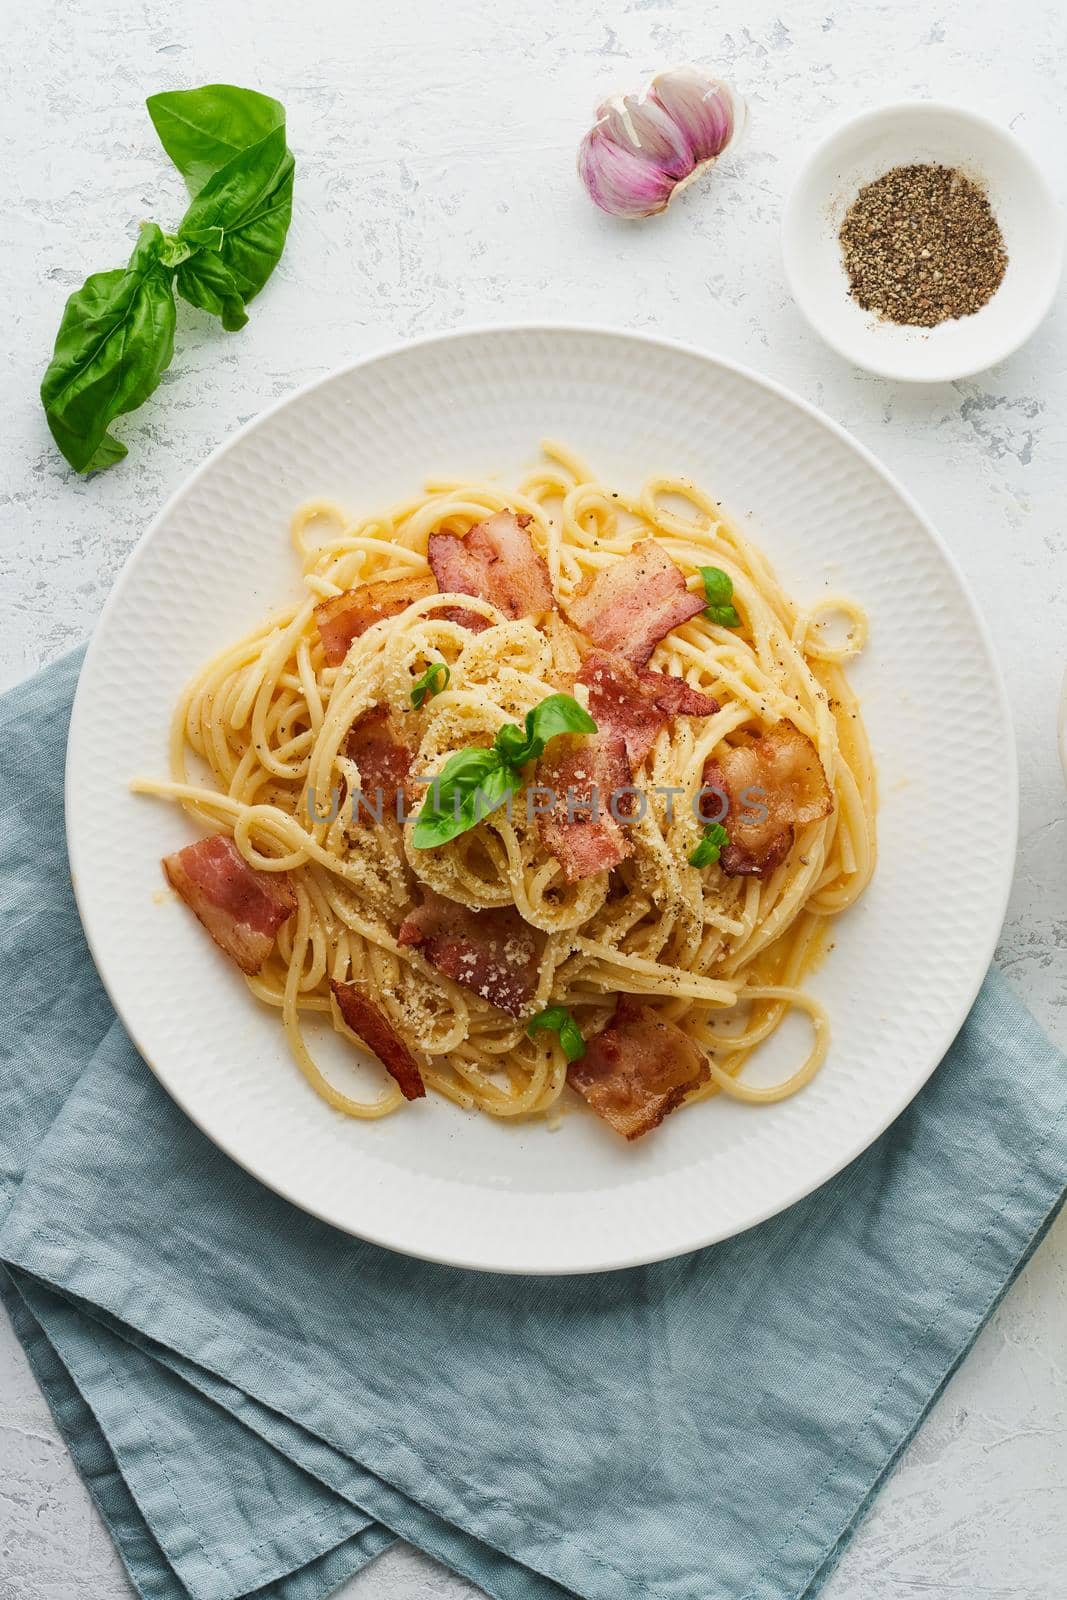 Carbonara pasta. Spaghetti with pancetta, egg, parmesan cheese and cream sauce by NataBene